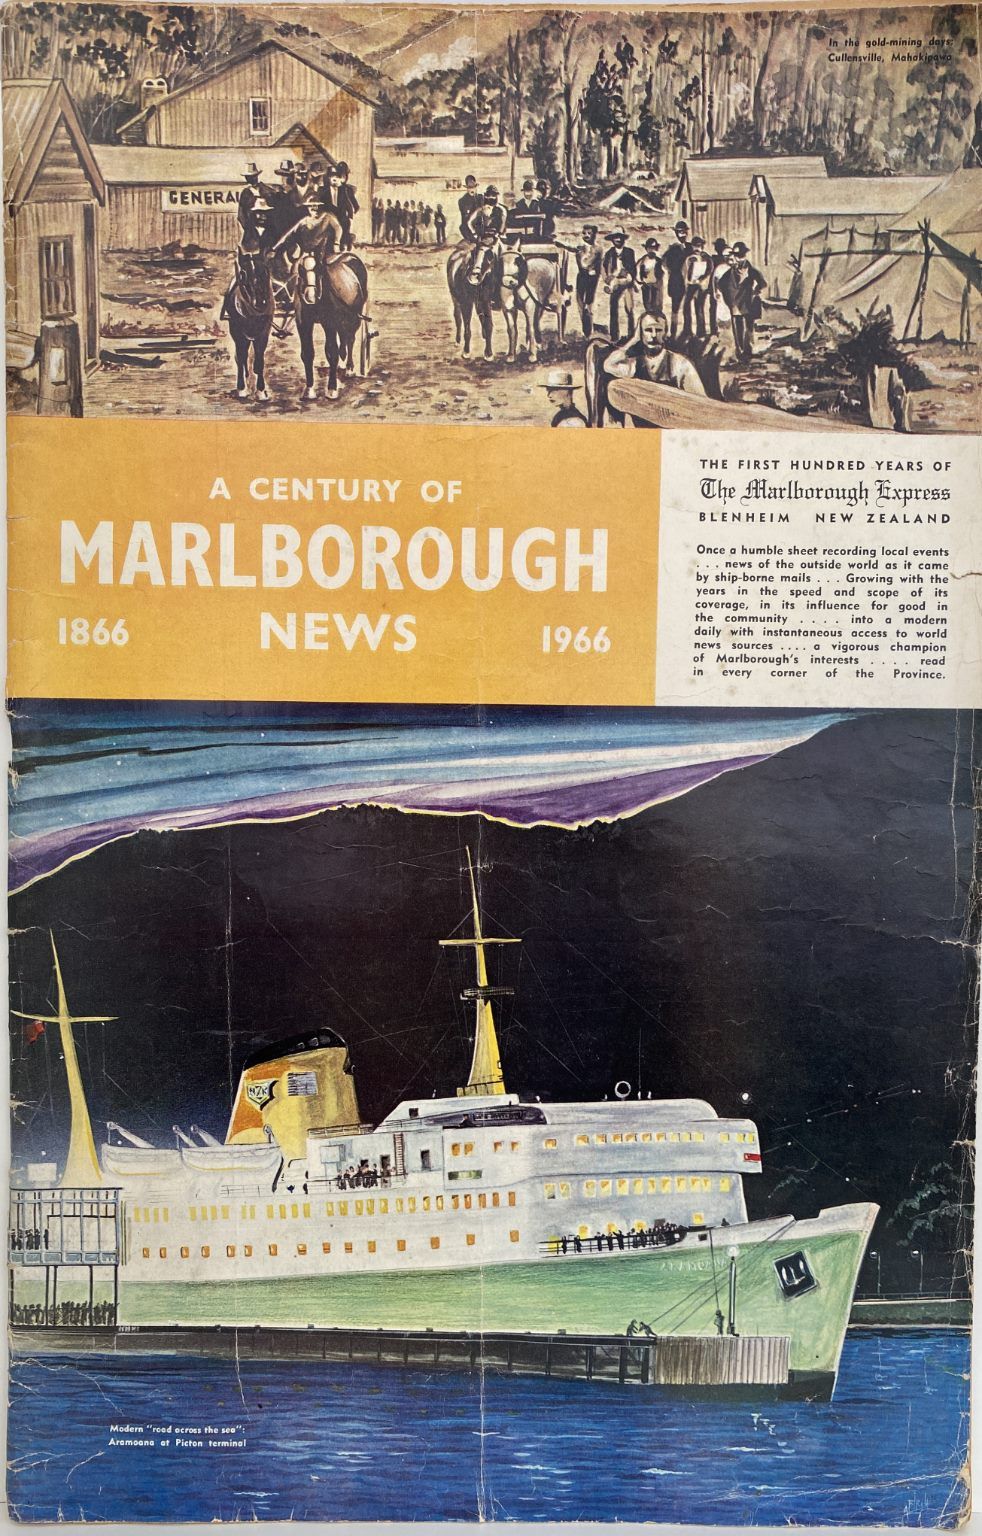 OLD NEWSPAPER: The Marlborough Express 1866-1966